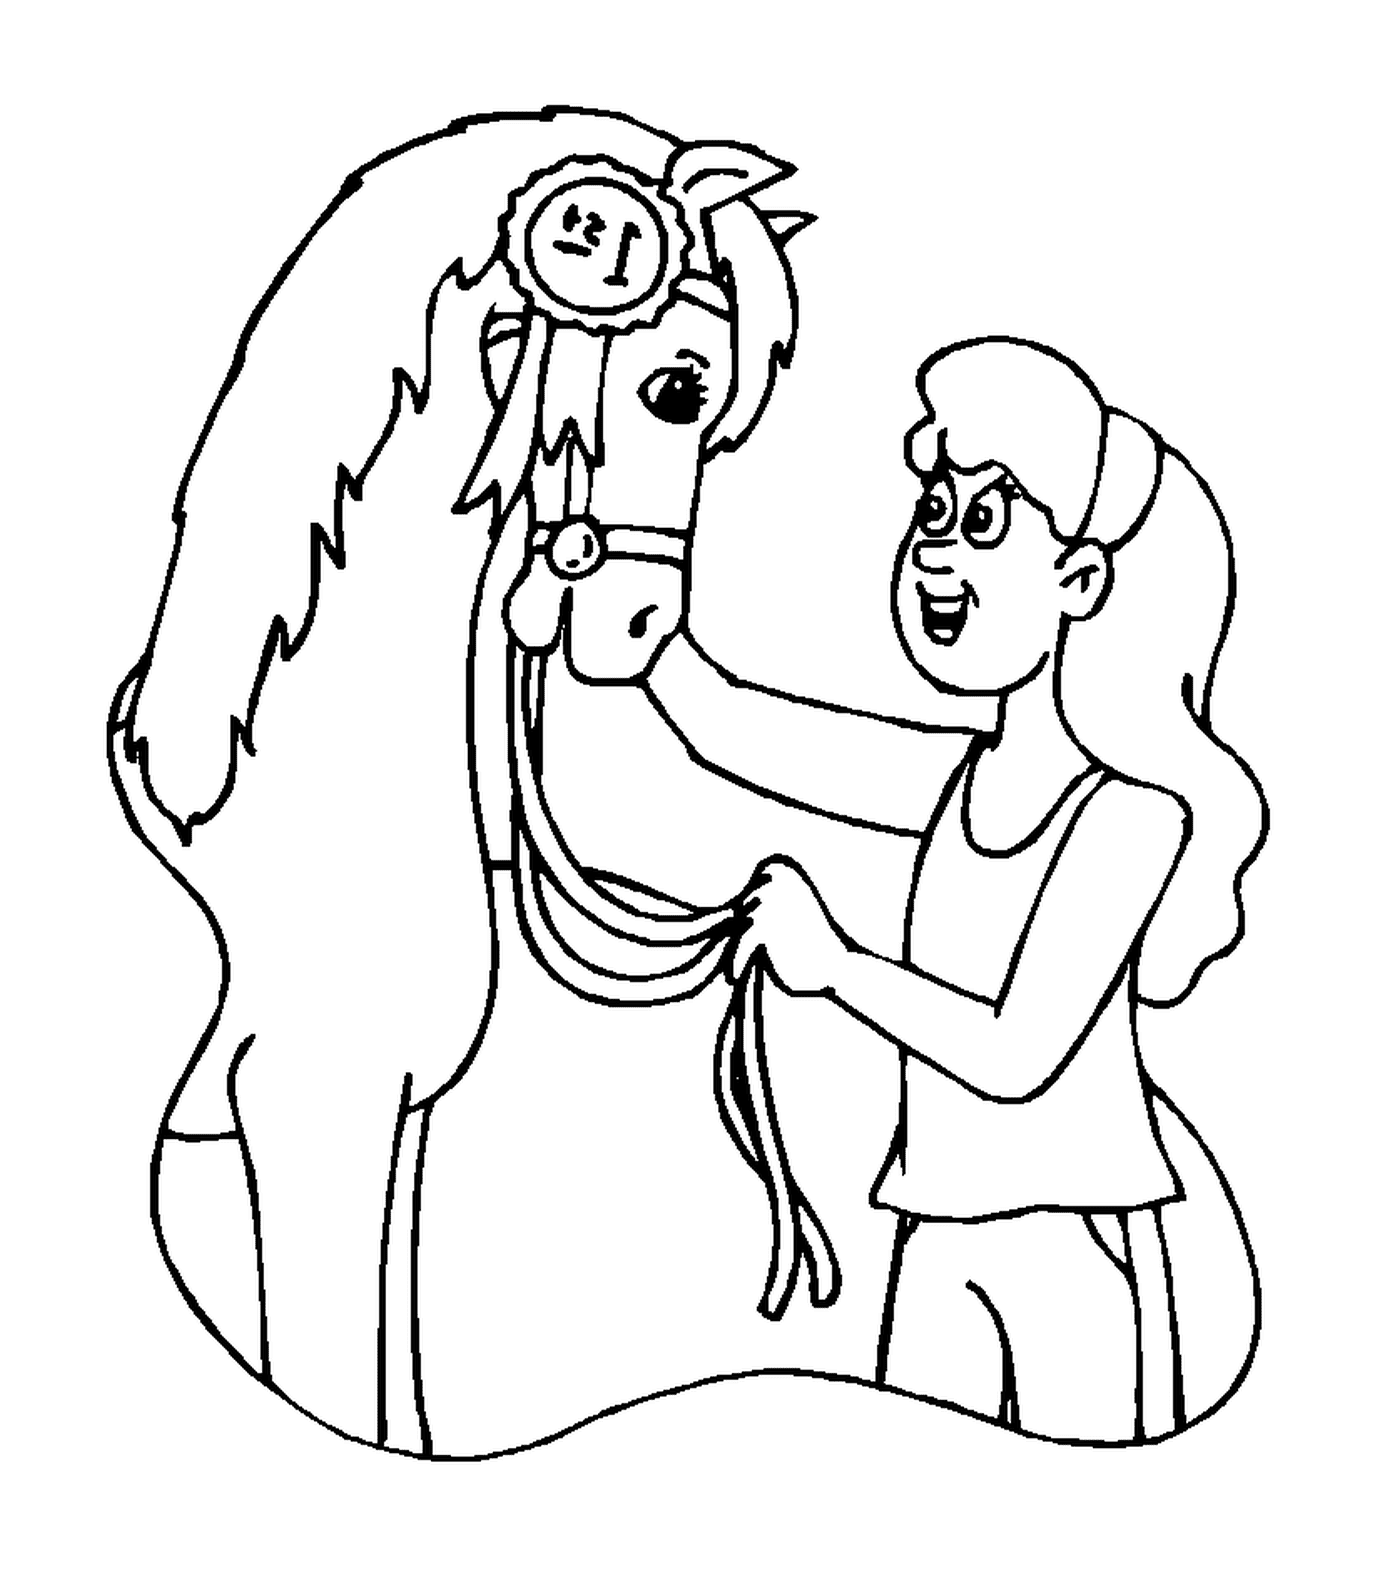  Muchacha cuidando de su caballo con ternura 